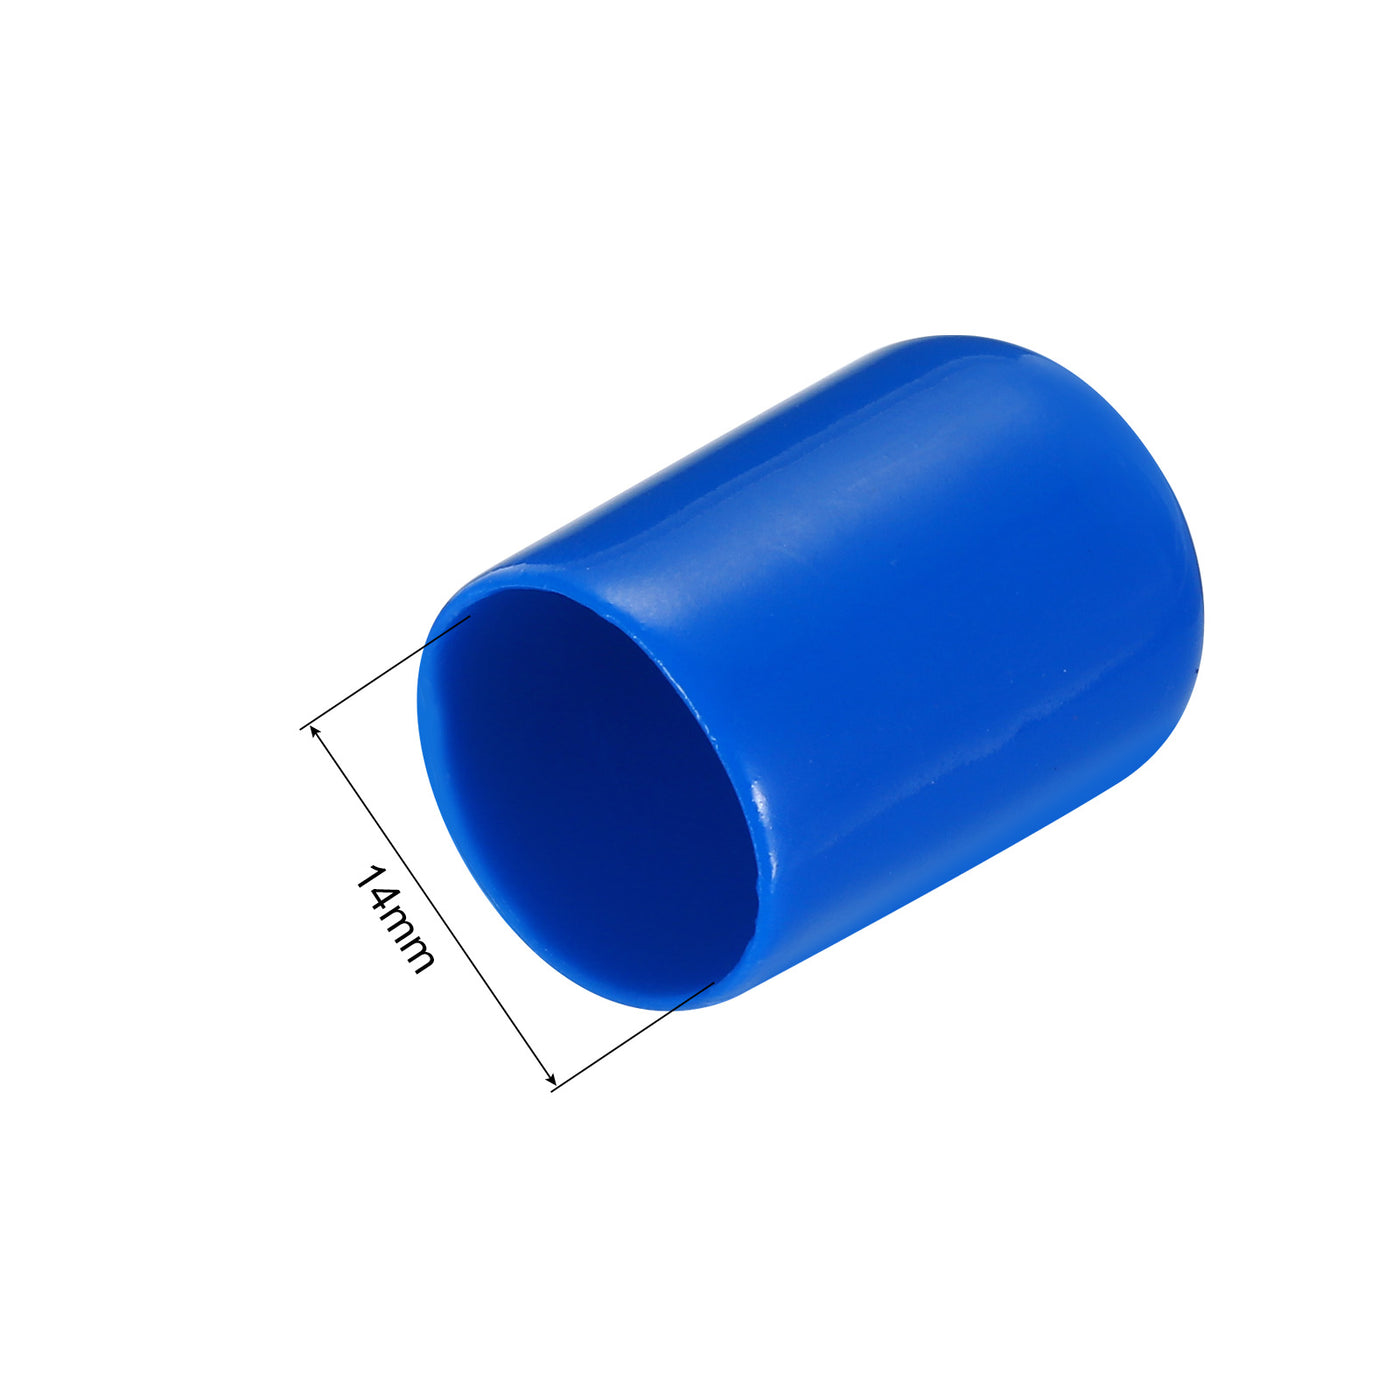 uxcell Uxcell 100pcs Rubber End Caps 14mm ID Vinyl PVC Round Tube Bolt Cap Cover Screw Thread Protectors Blue